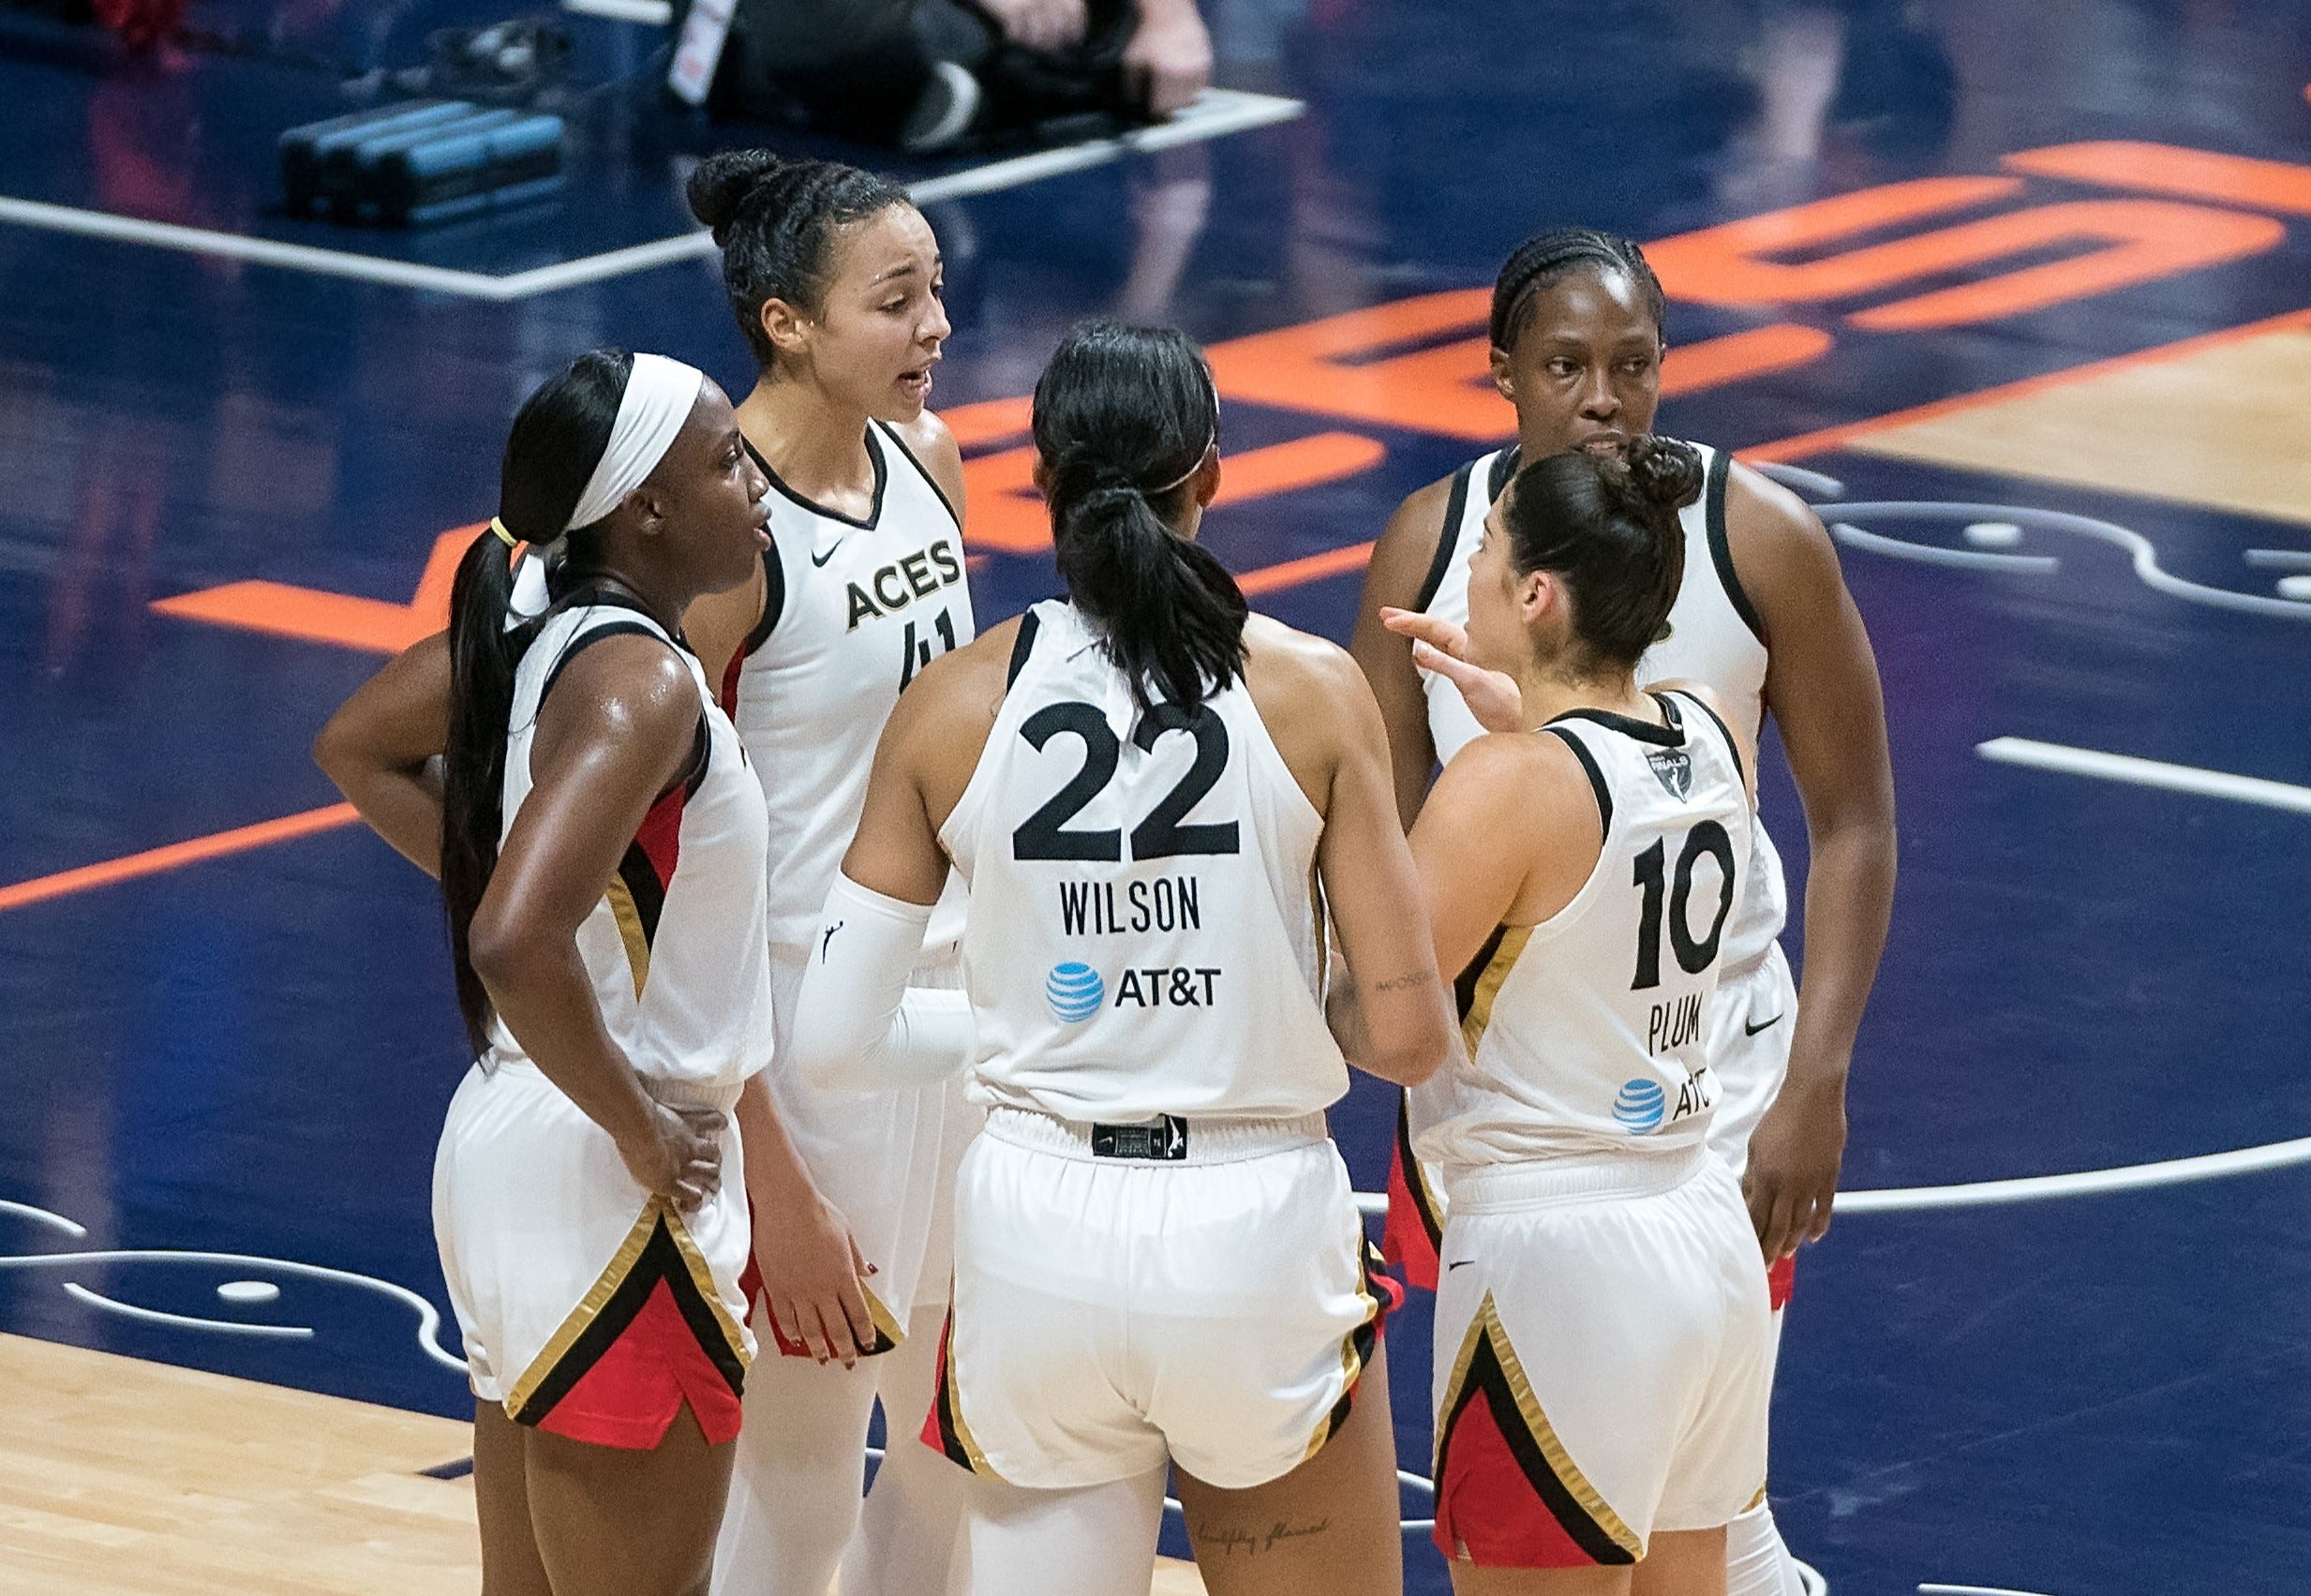 Buy WNBA VICTORY JERSEY LAS VEGAS ACES A JA WILSON WOMENS on !